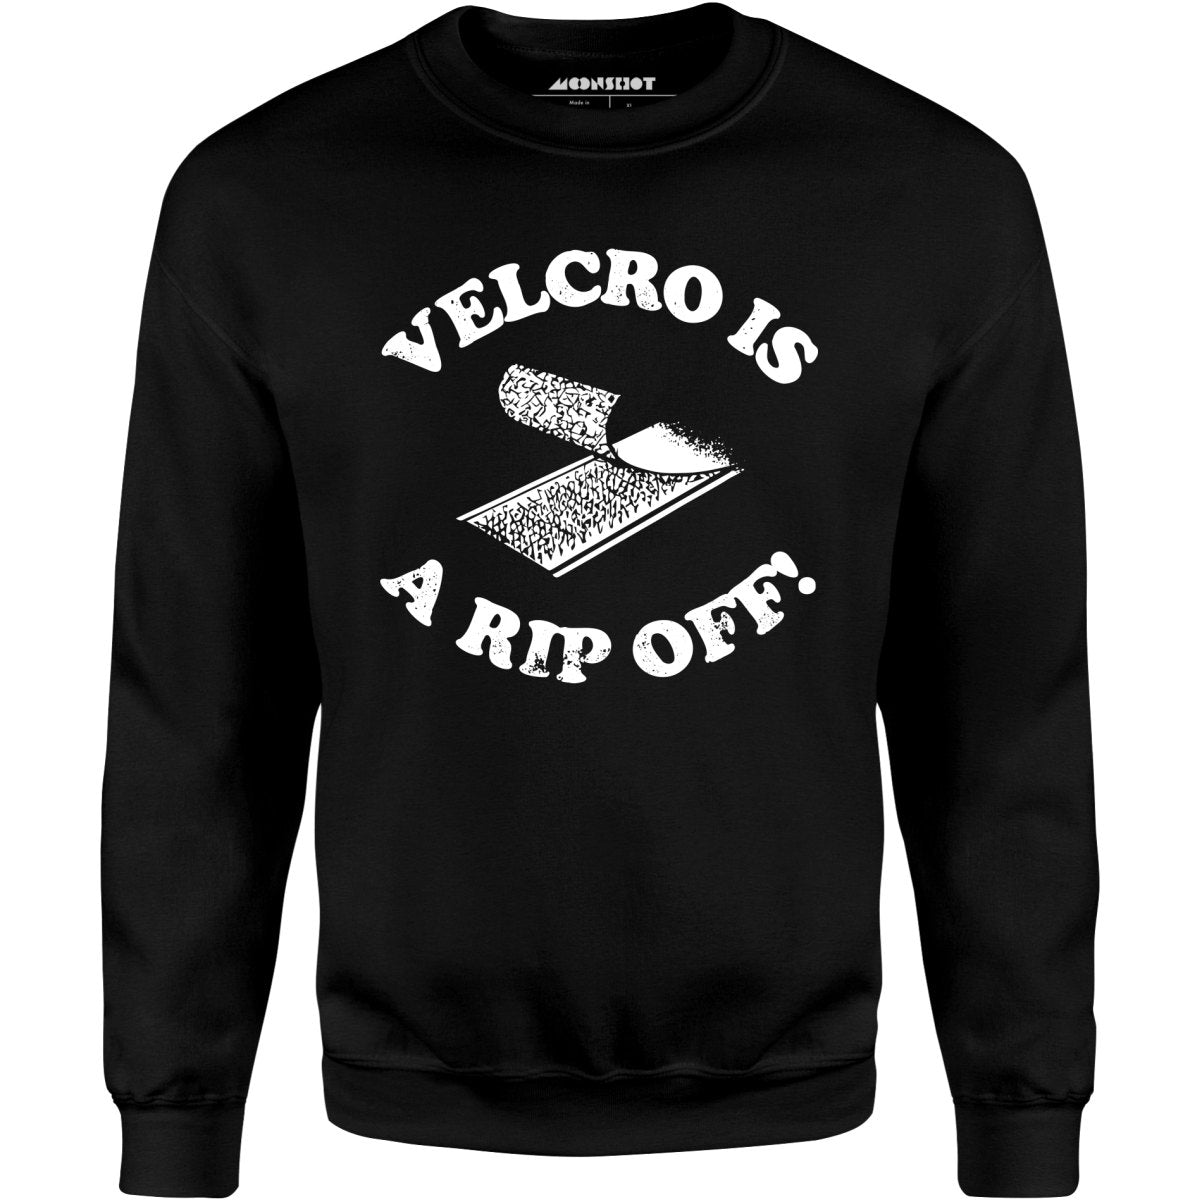 Velcro is a Rip Off - Unisex Sweatshirt